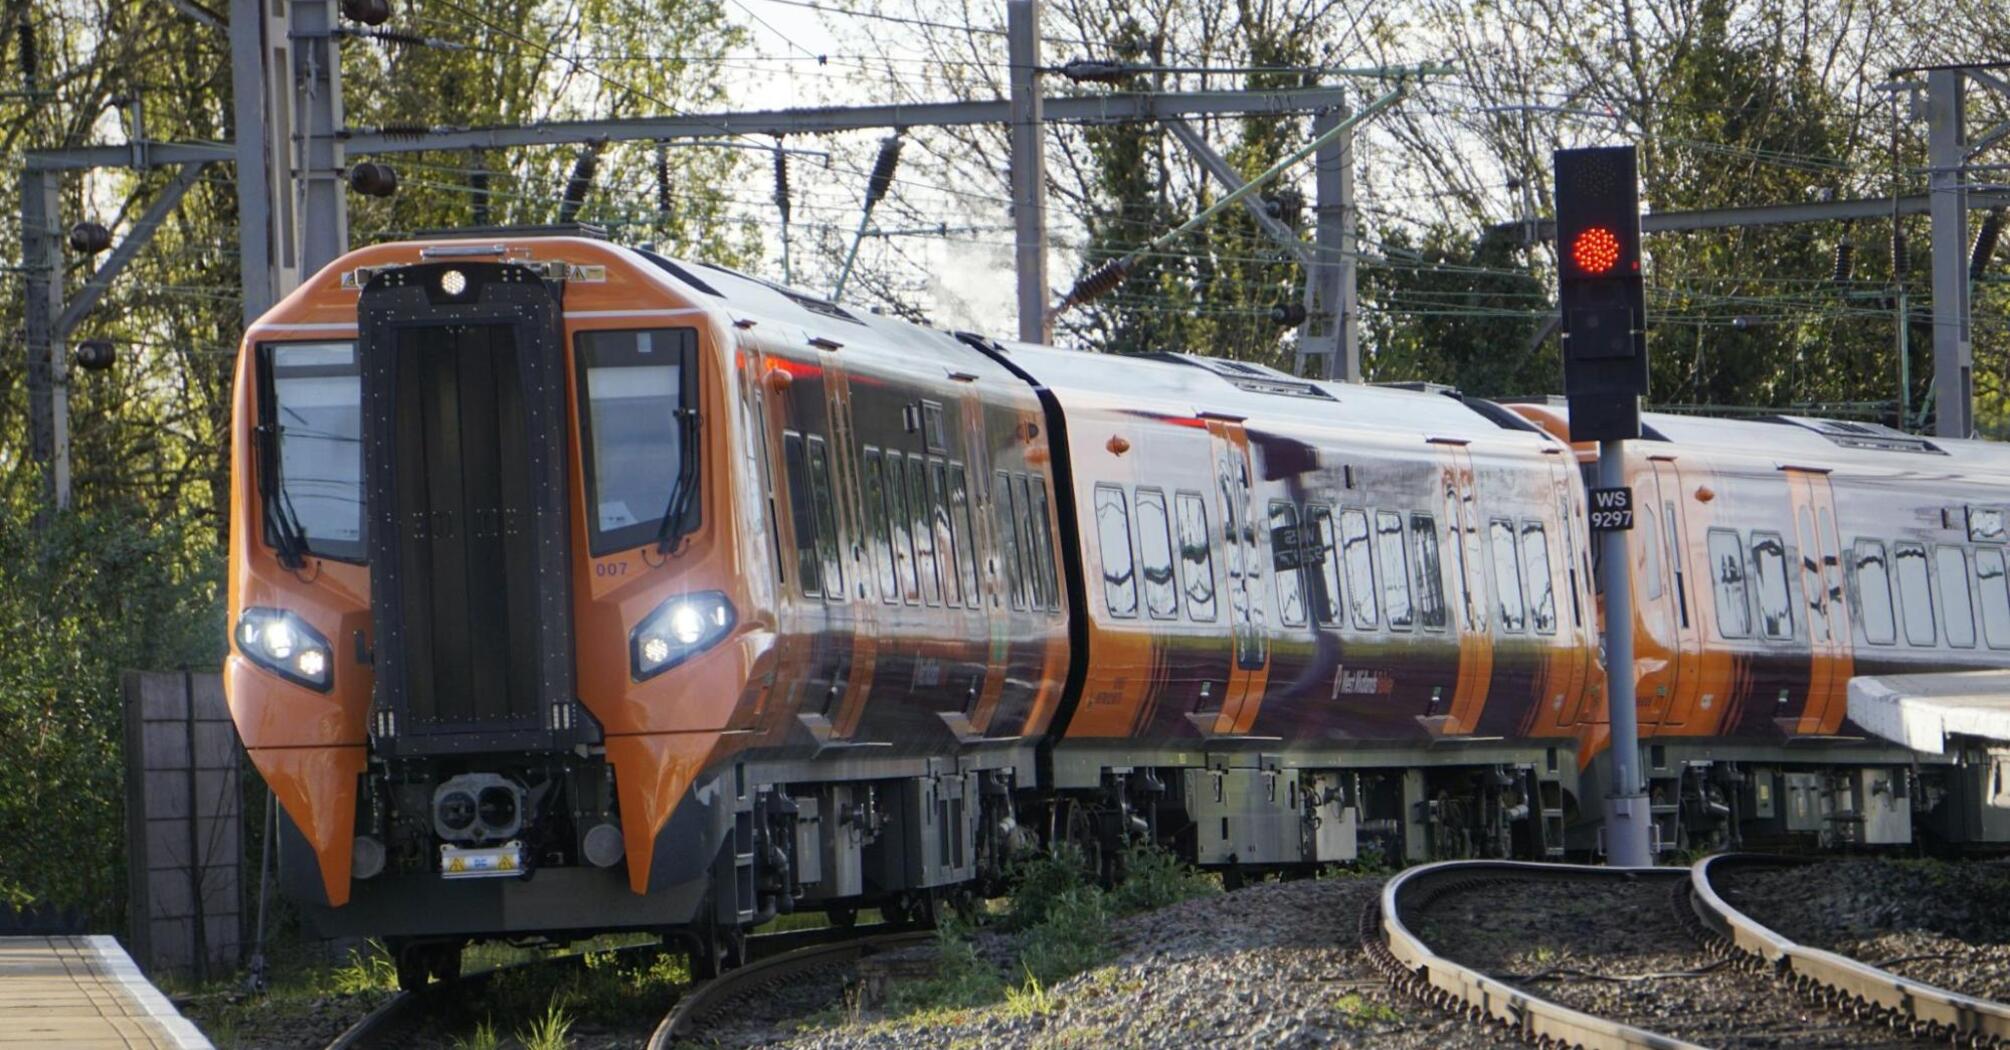 A West Midlands Railway train on the tracks